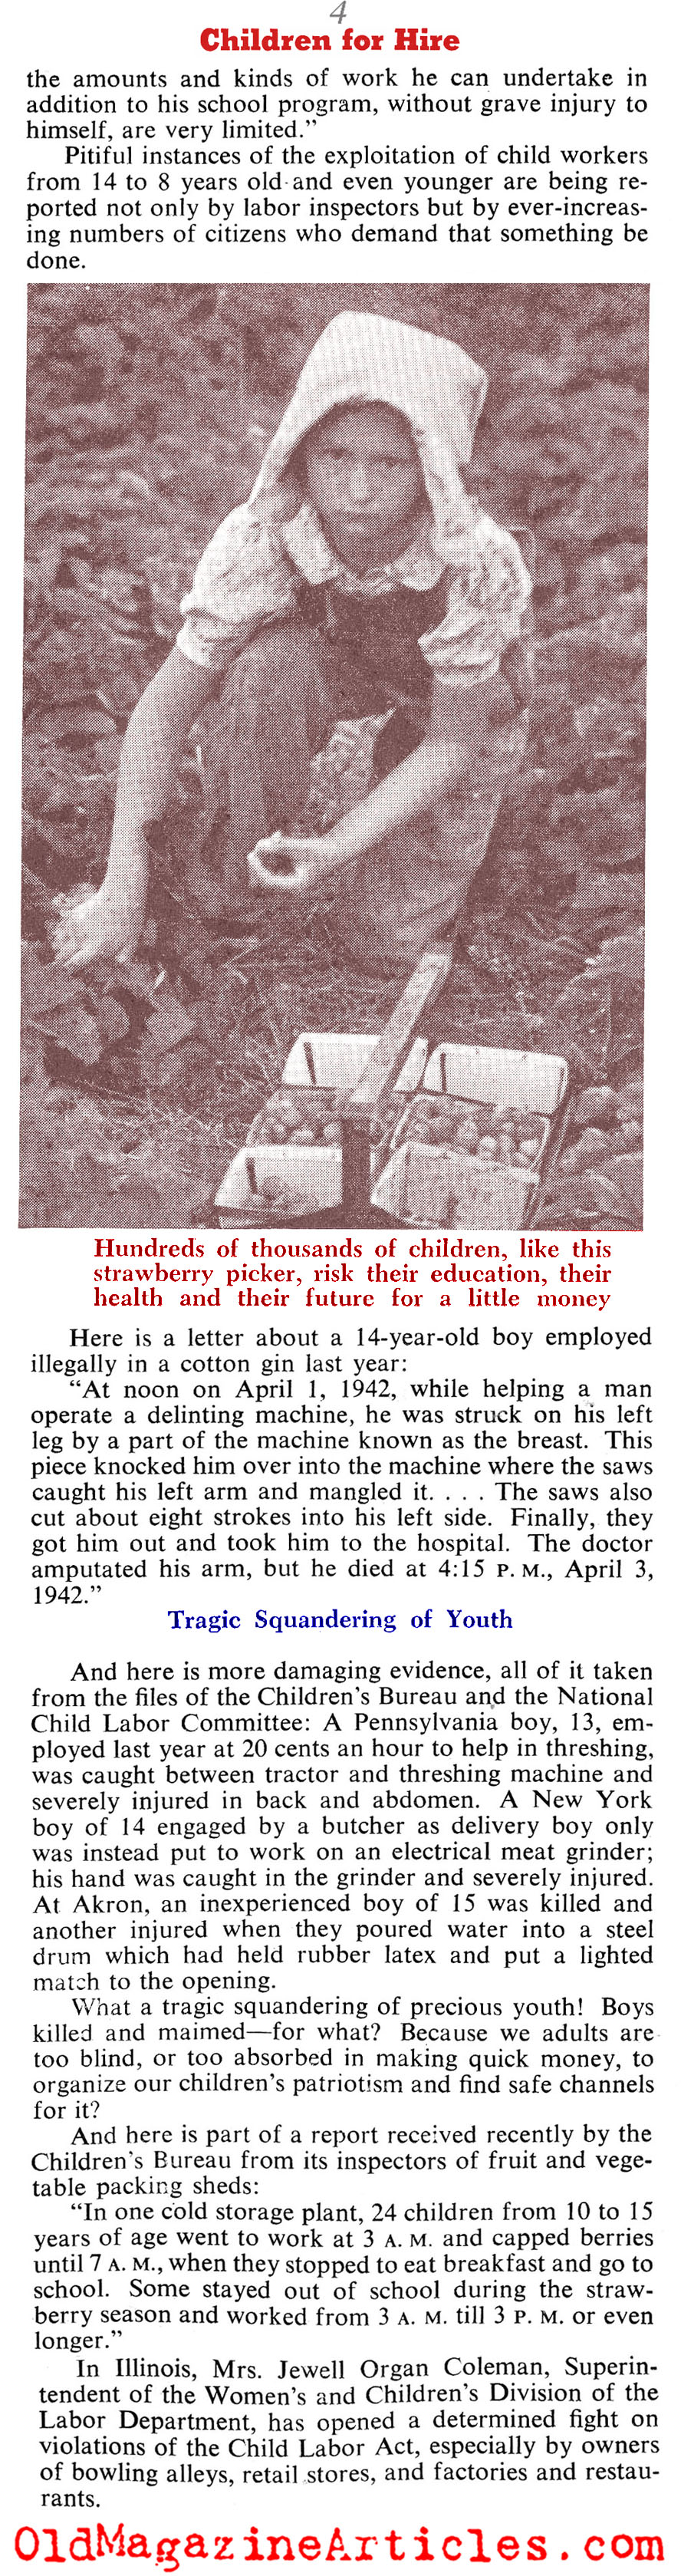 Child Labor During W.W. II (Collier's Magazine, 1943)